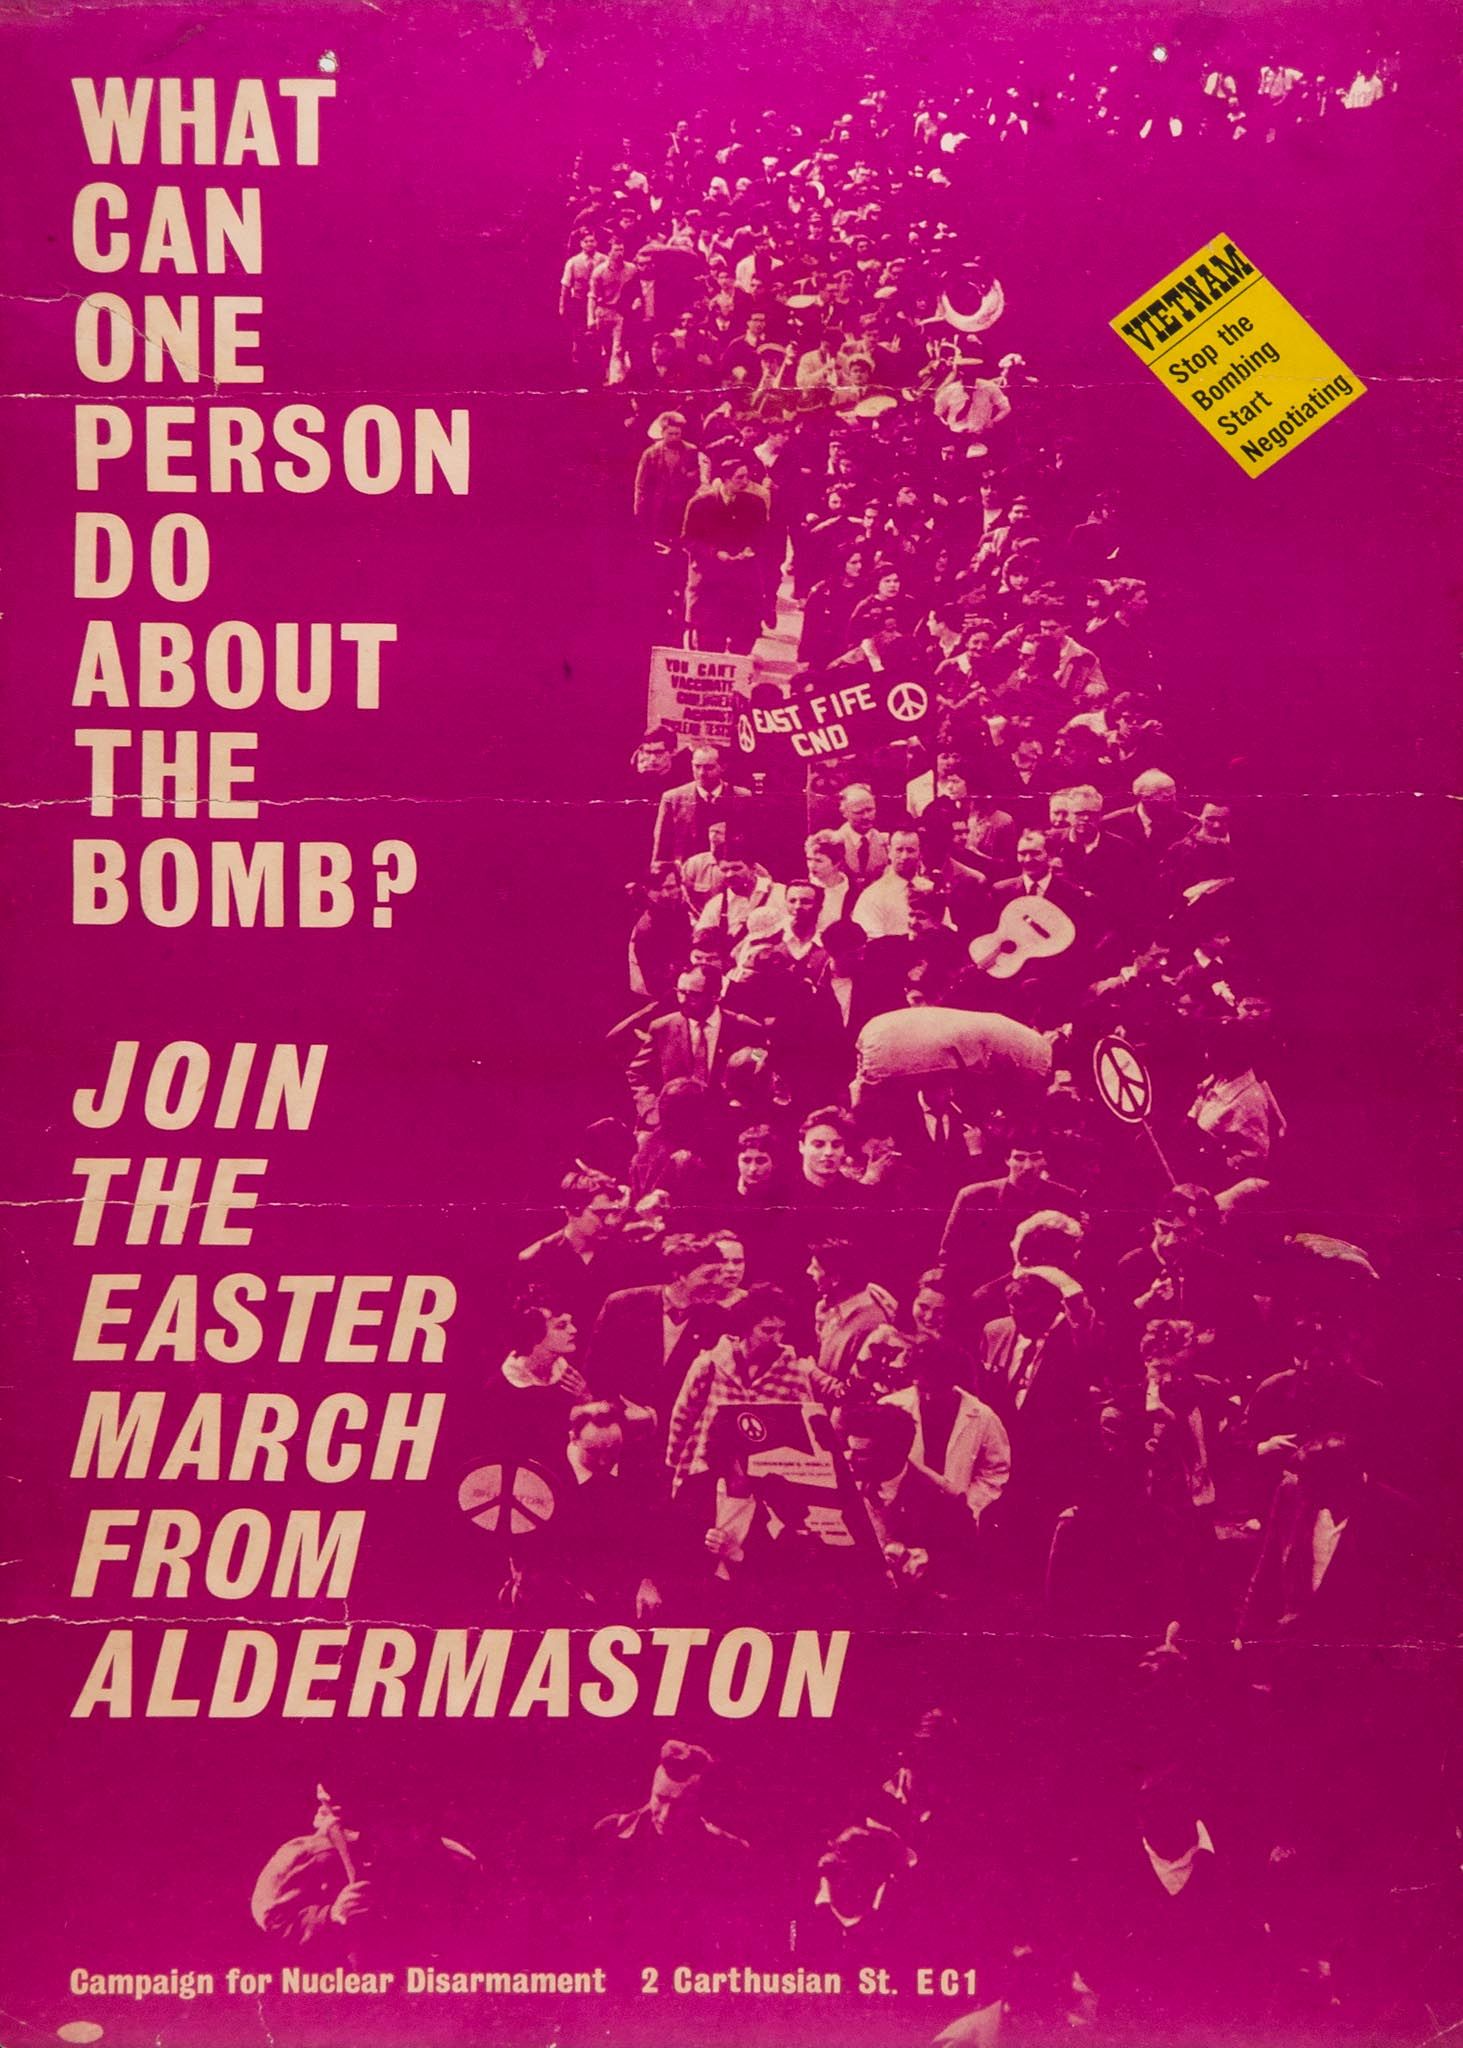 MEM A 78 x 50cm poster advertising the Easter march from Aldermaston... MEM A 78 x 50cm poster